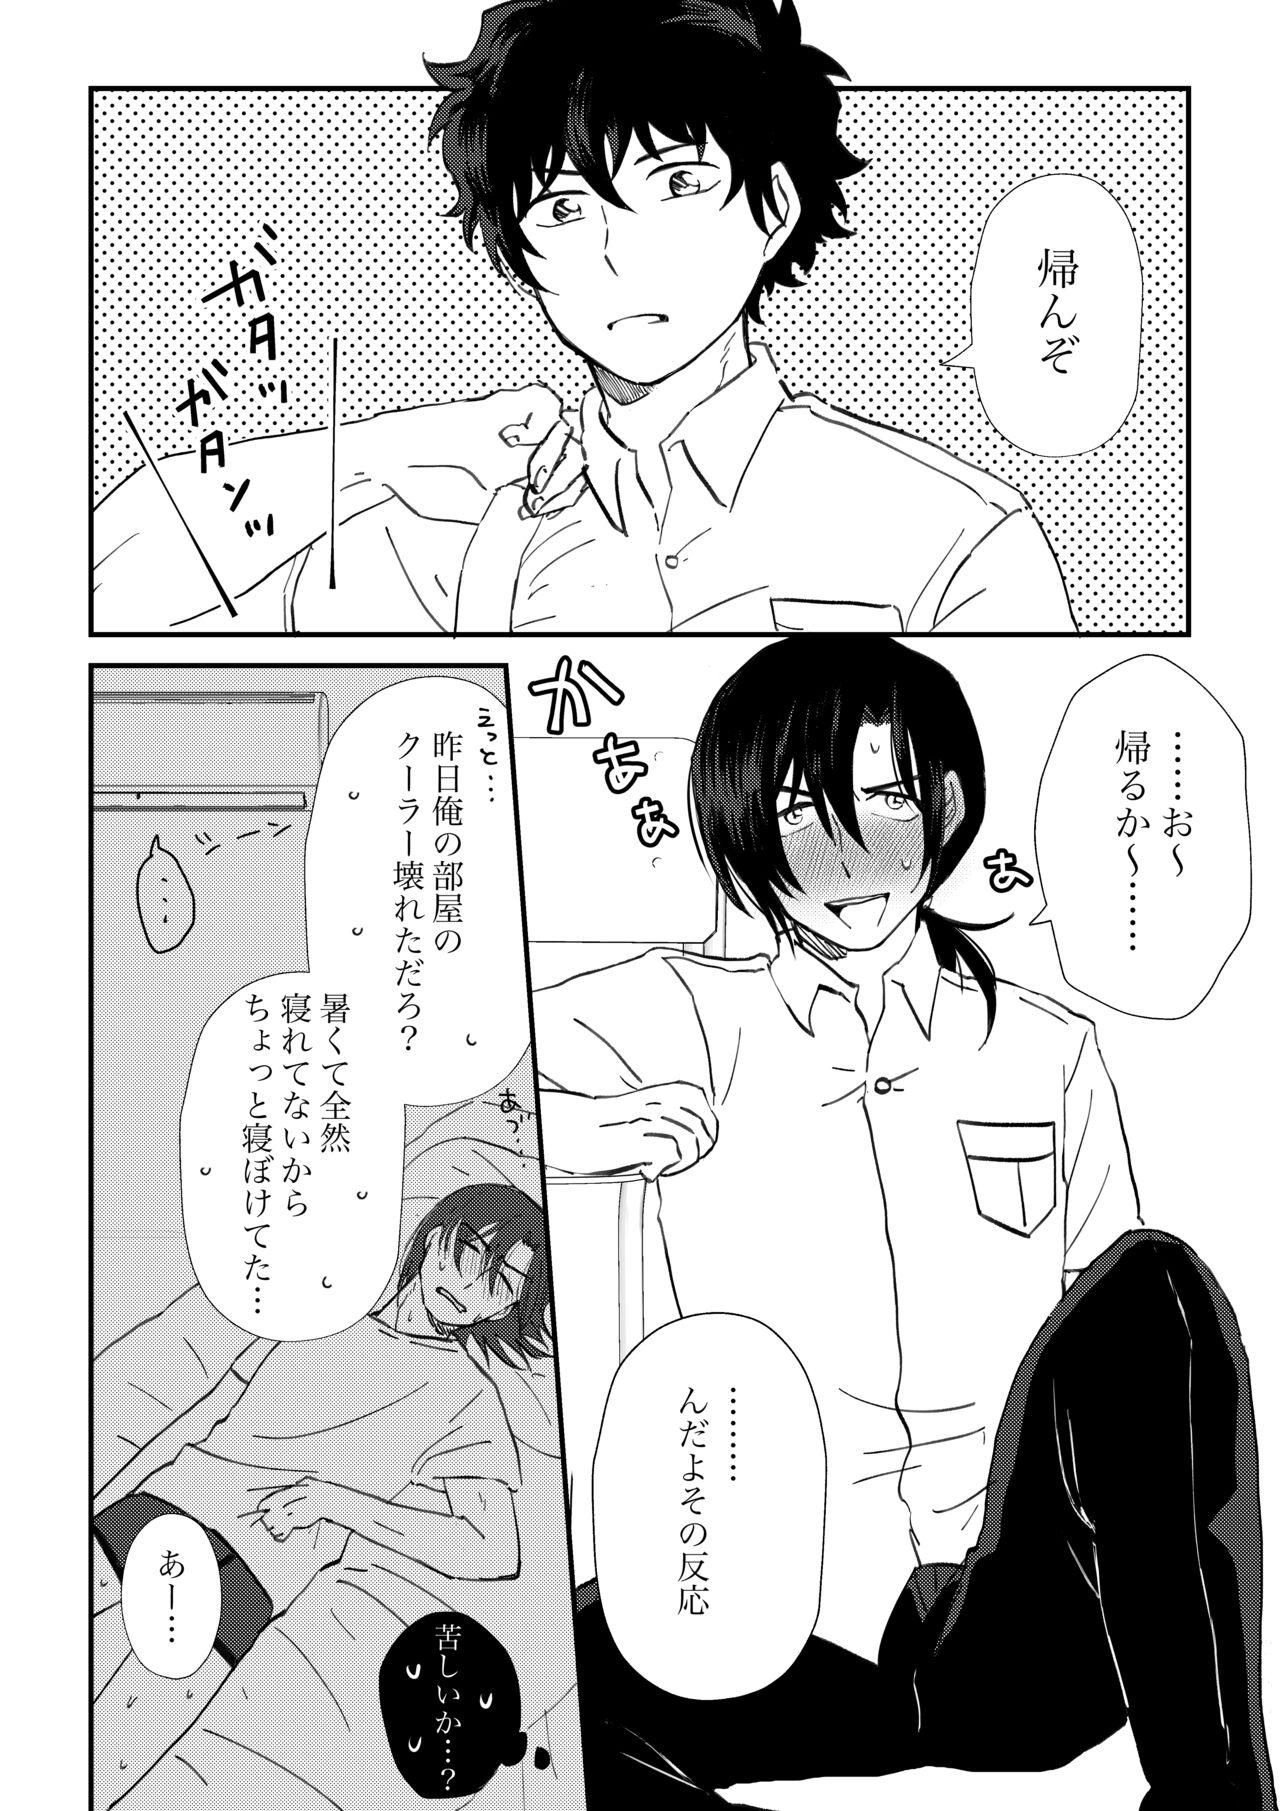 Weird All because of summer - Detective conan | meitantei conan Large - Page 7